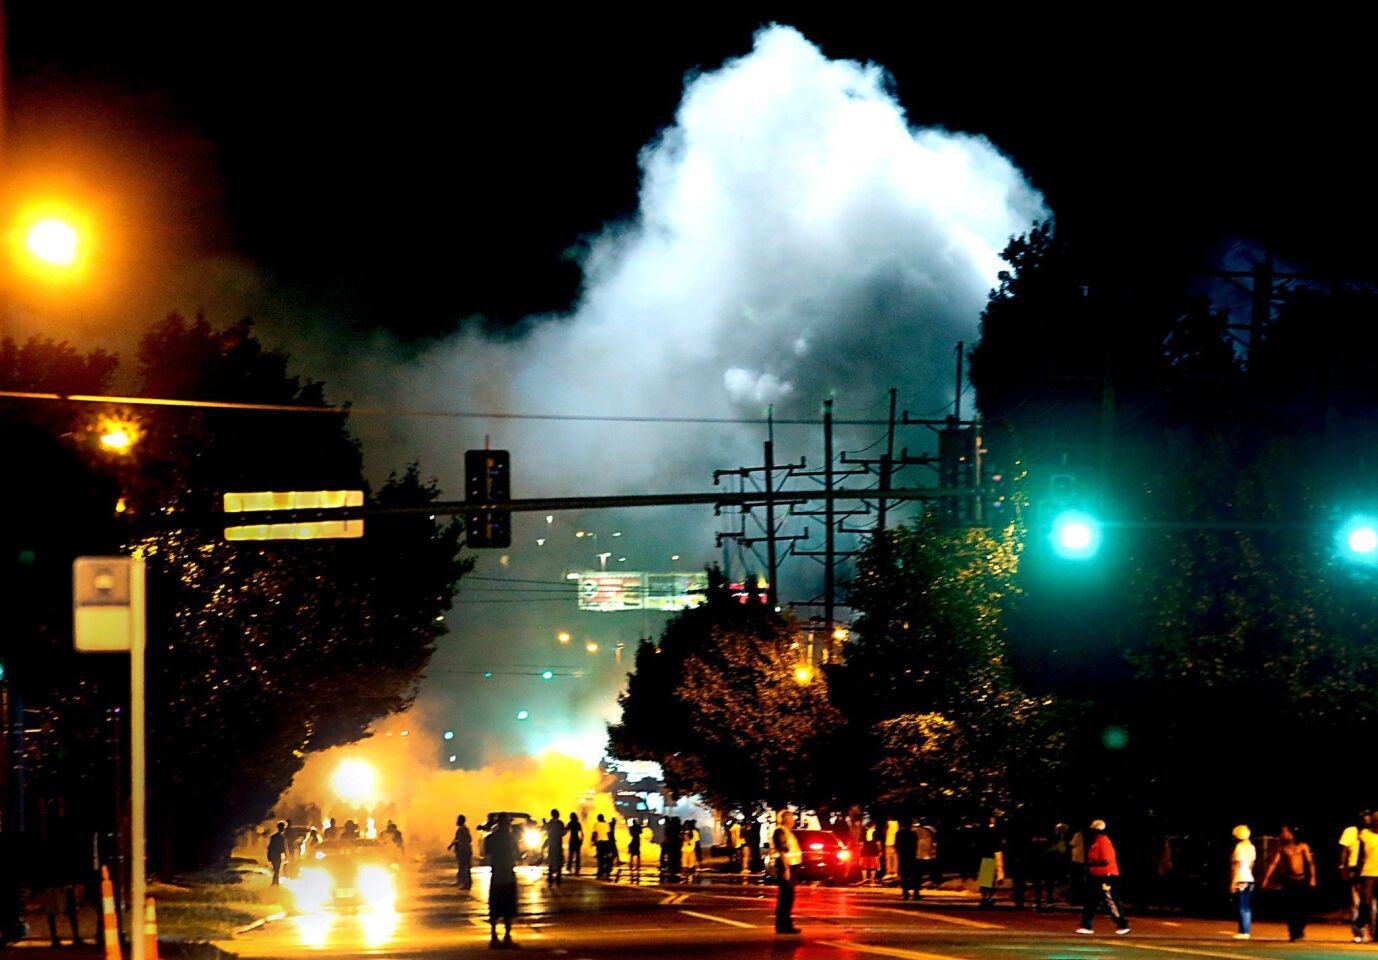 Conflict in Ferguson, Mo.